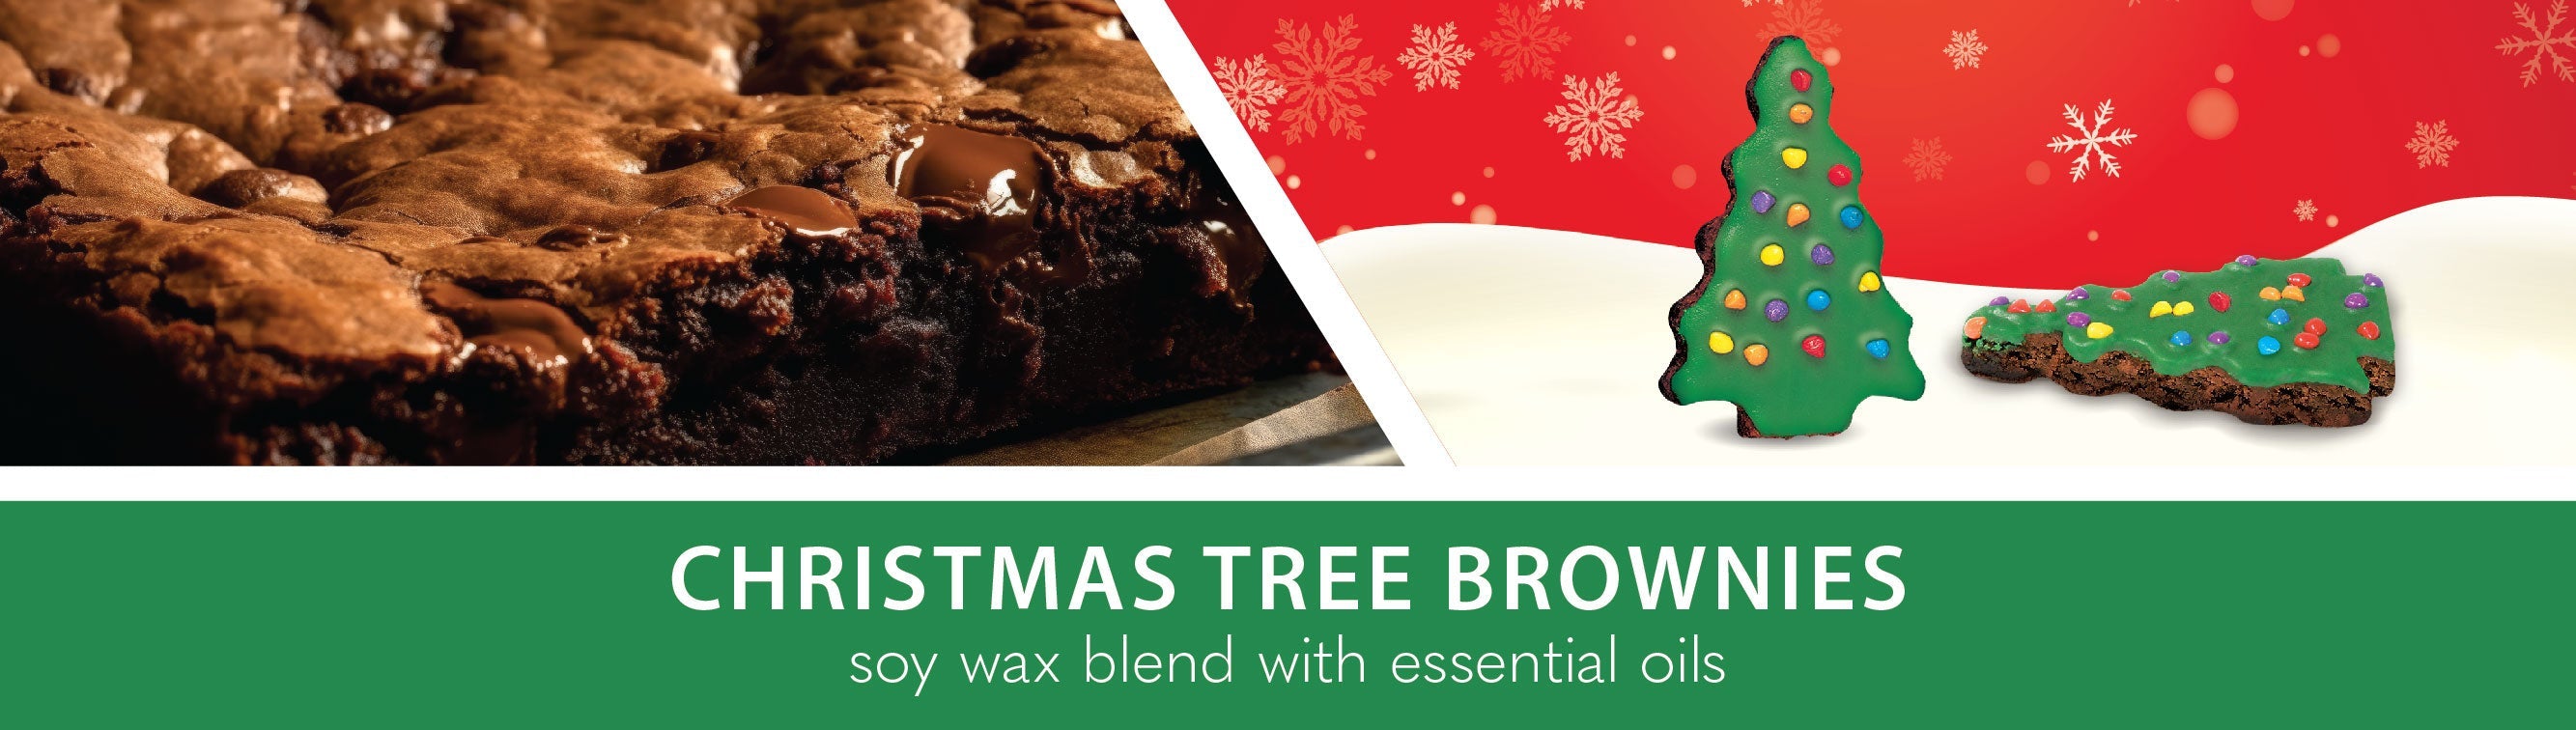 Christmas Tree Brownies Fragrance-Goose Creek Candle